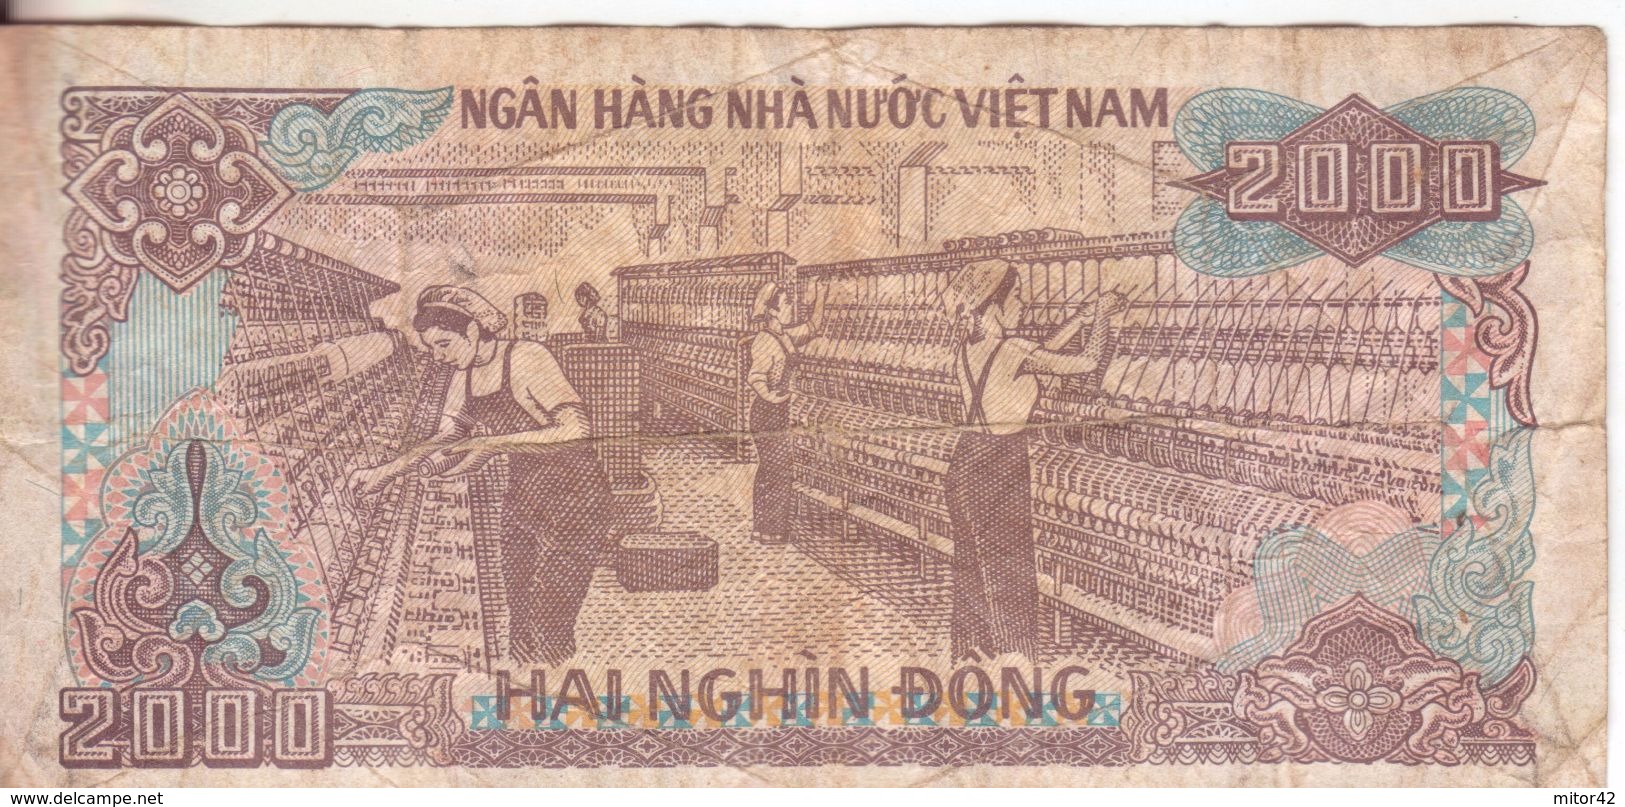 75-Vietnam-Cartamoneta-Banconota Circolata-2000 Dong-Stato Di Conservazione:scadente - Vietnam